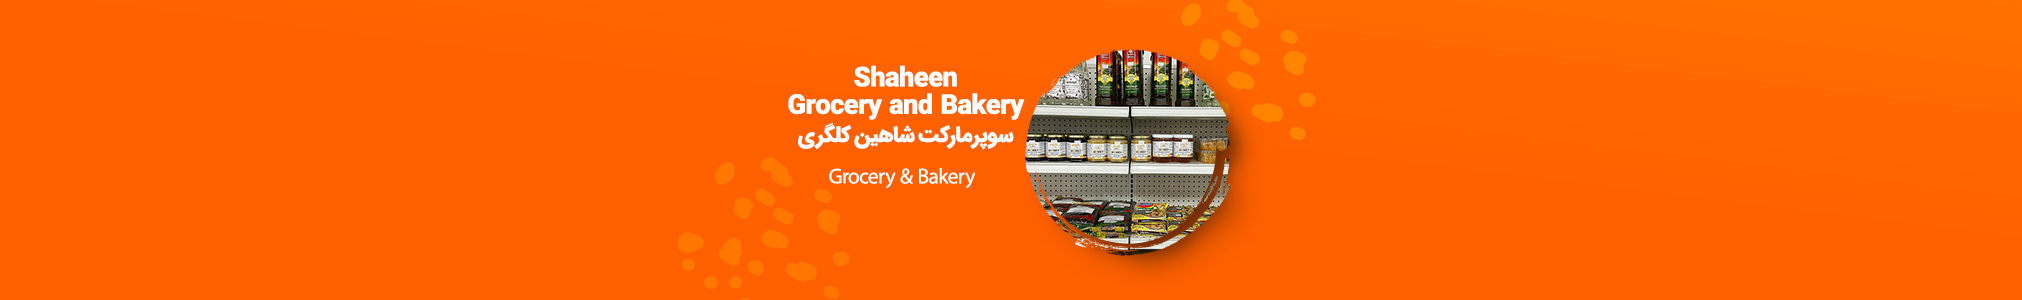 Shaheen Grocery Calgary